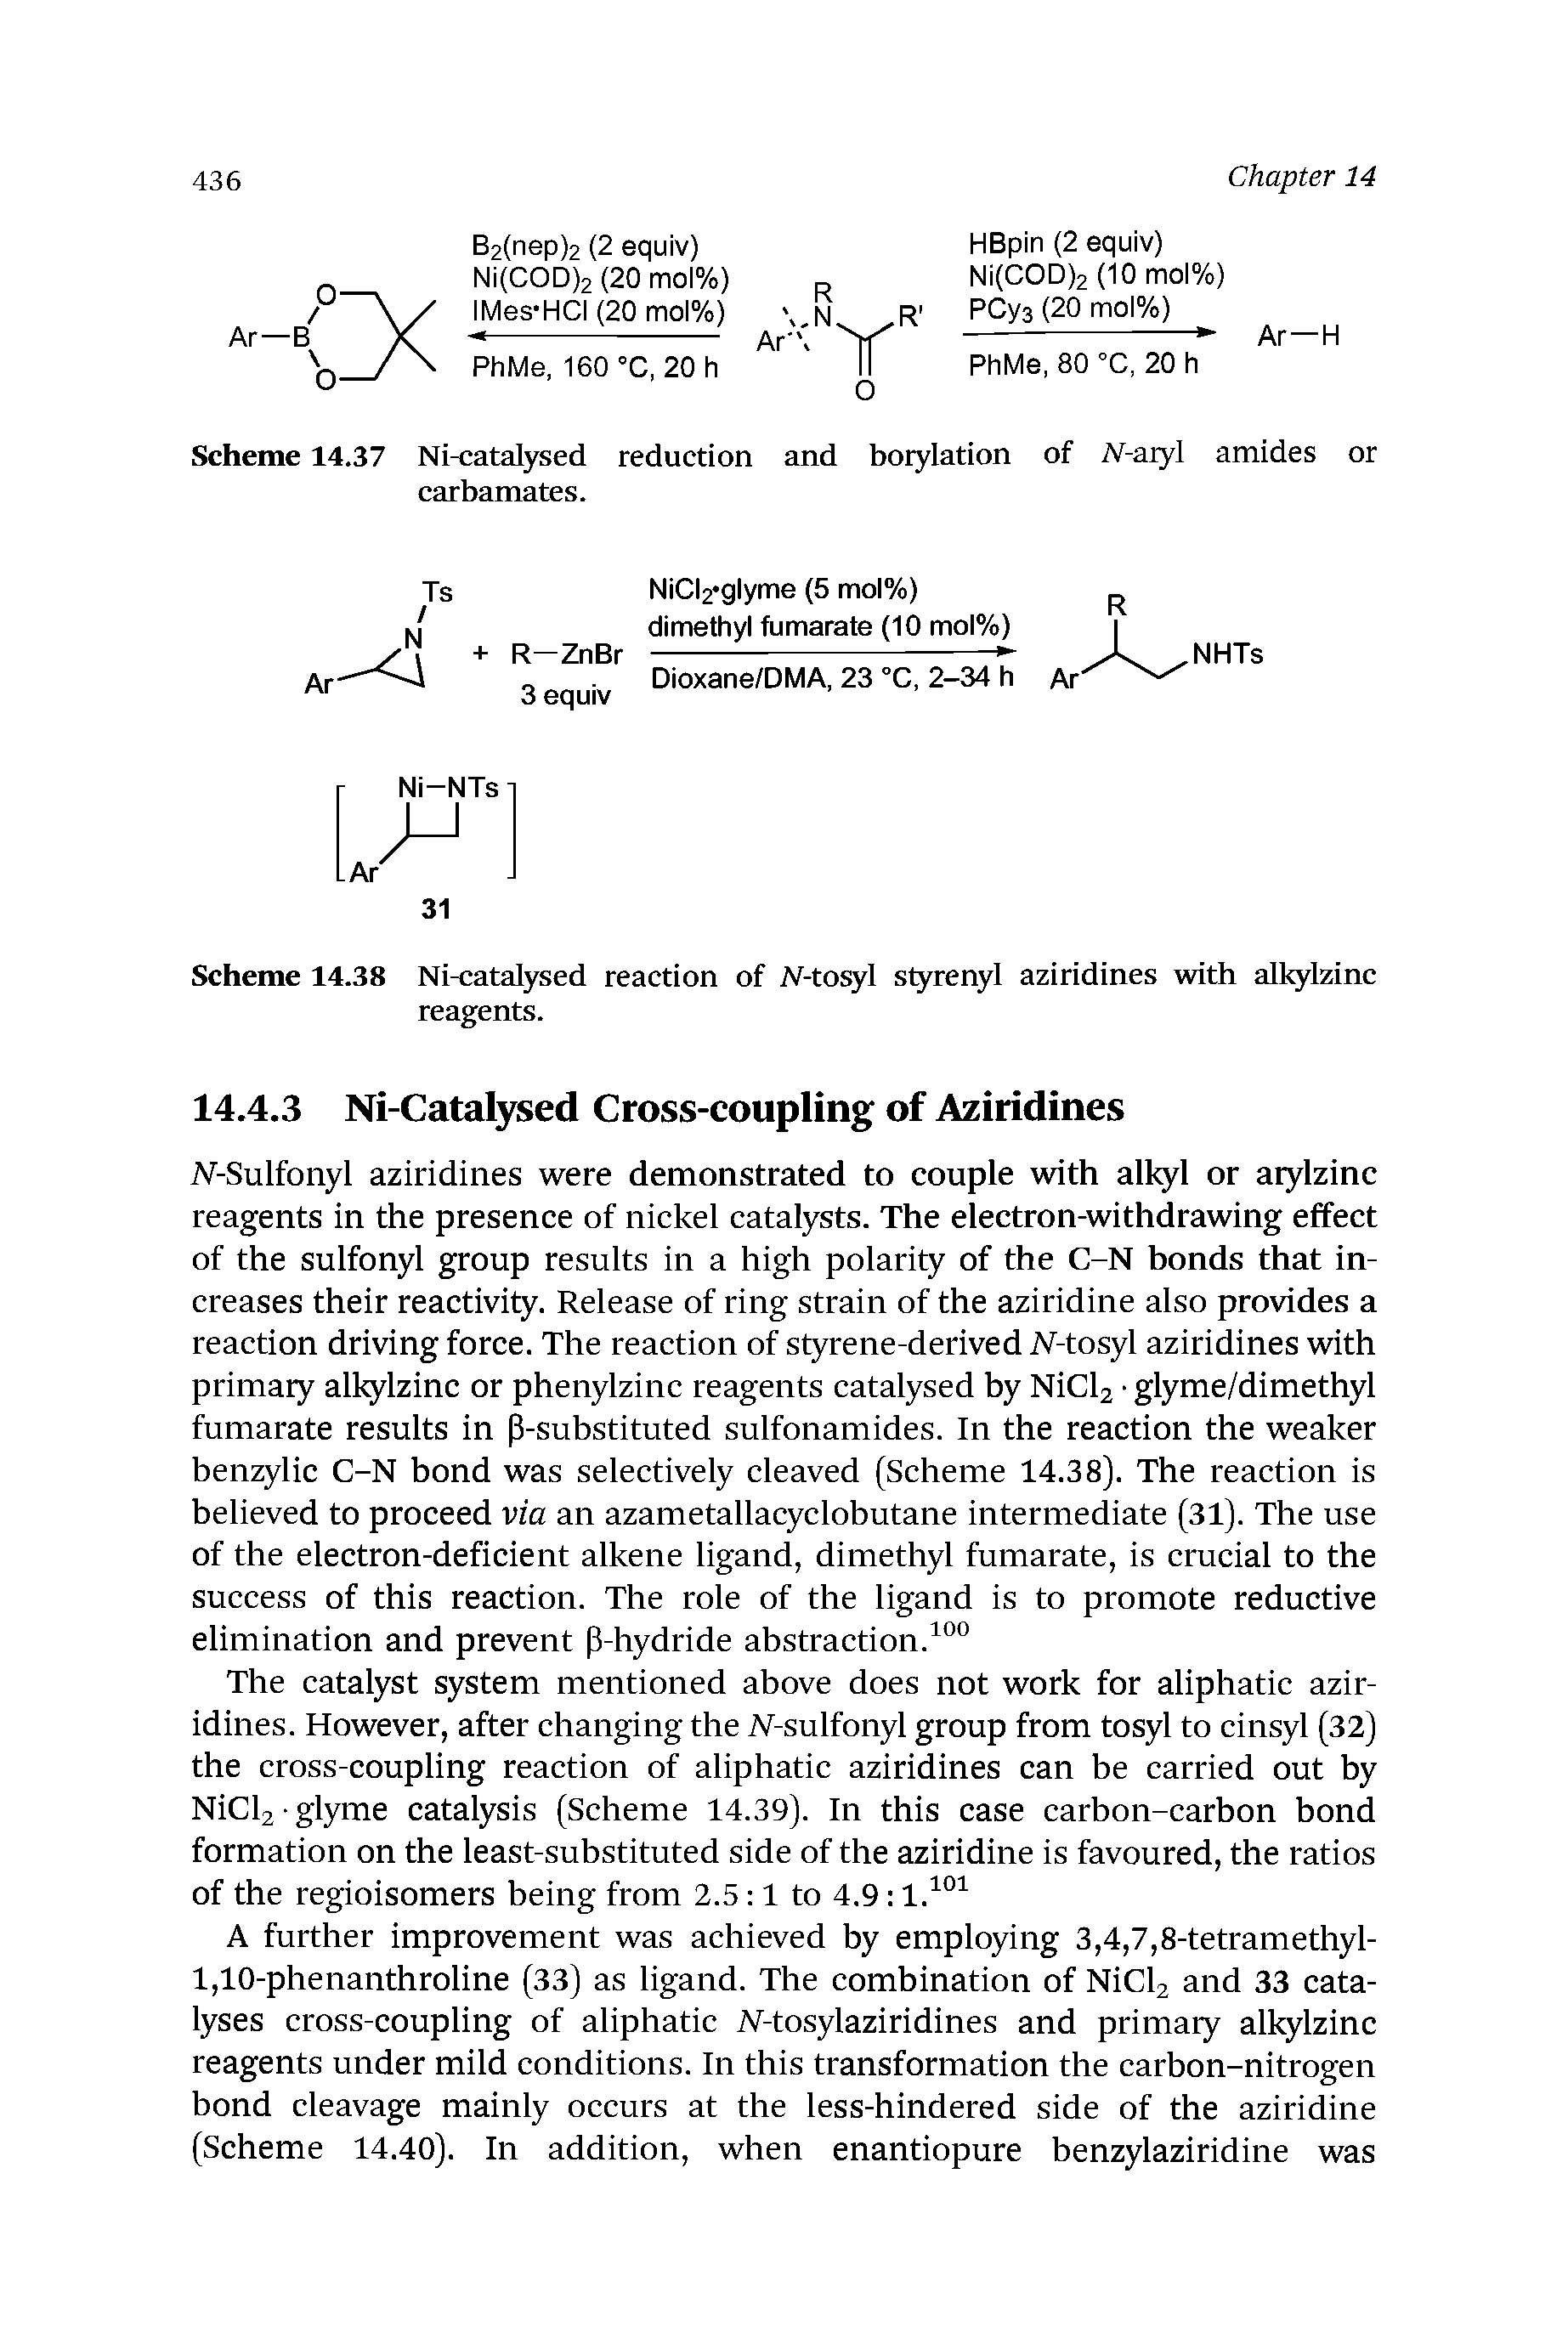 Scheme 14.37 Ni-catatysed reduction and boiylation of Af-aiyl amides or carbamates.